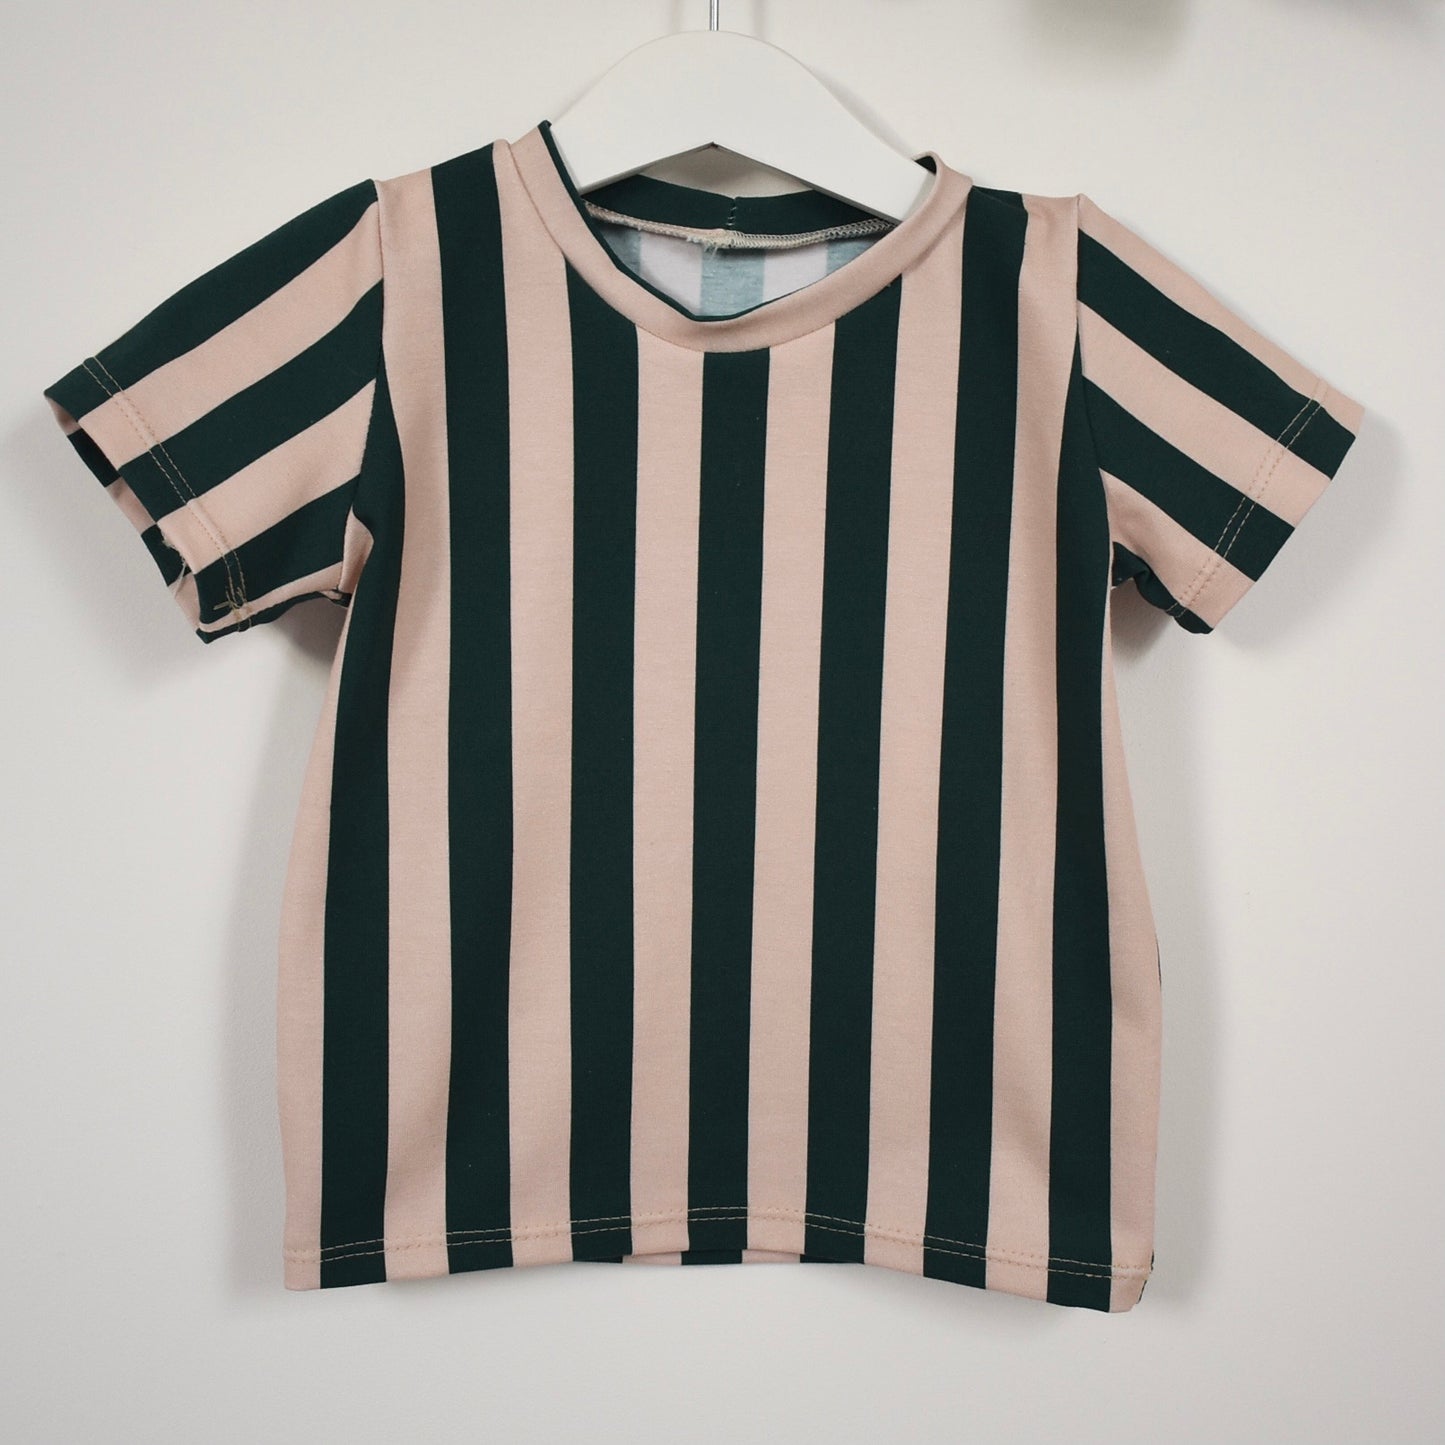 Snazzy Green Striped Children’s T-Shirt